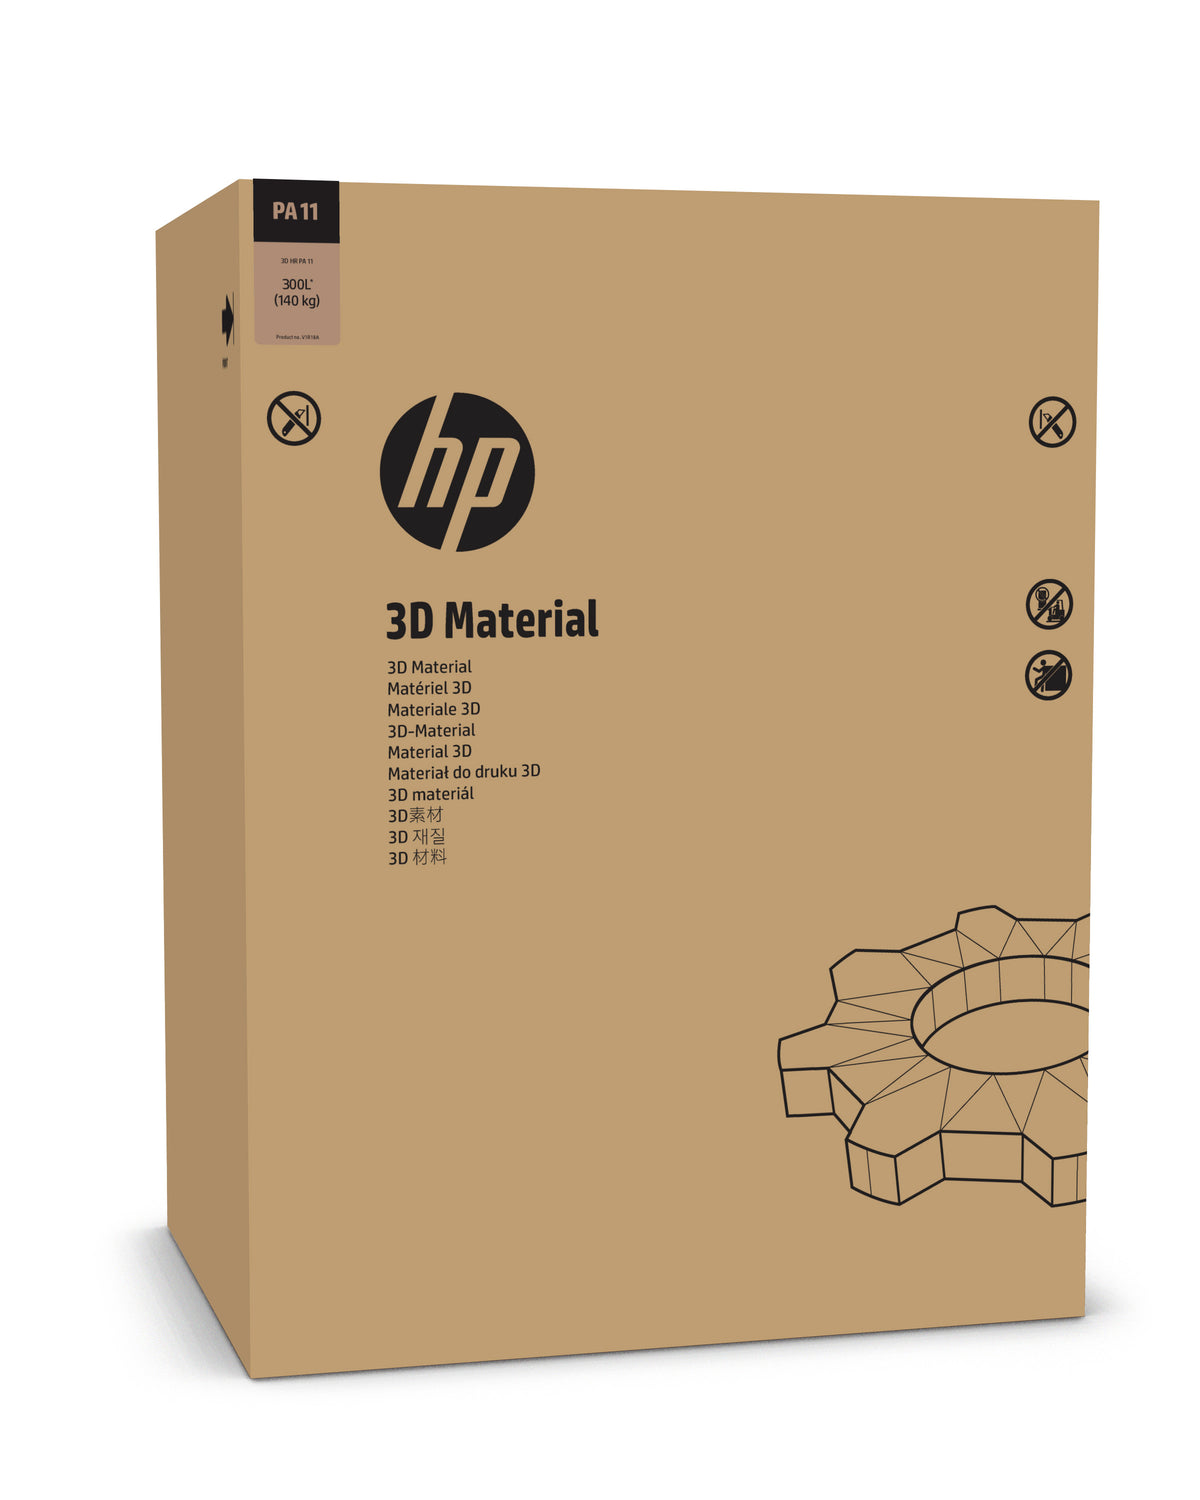 HP 3D HR PA11 300L /140Kg  - HP 4210 Series Only